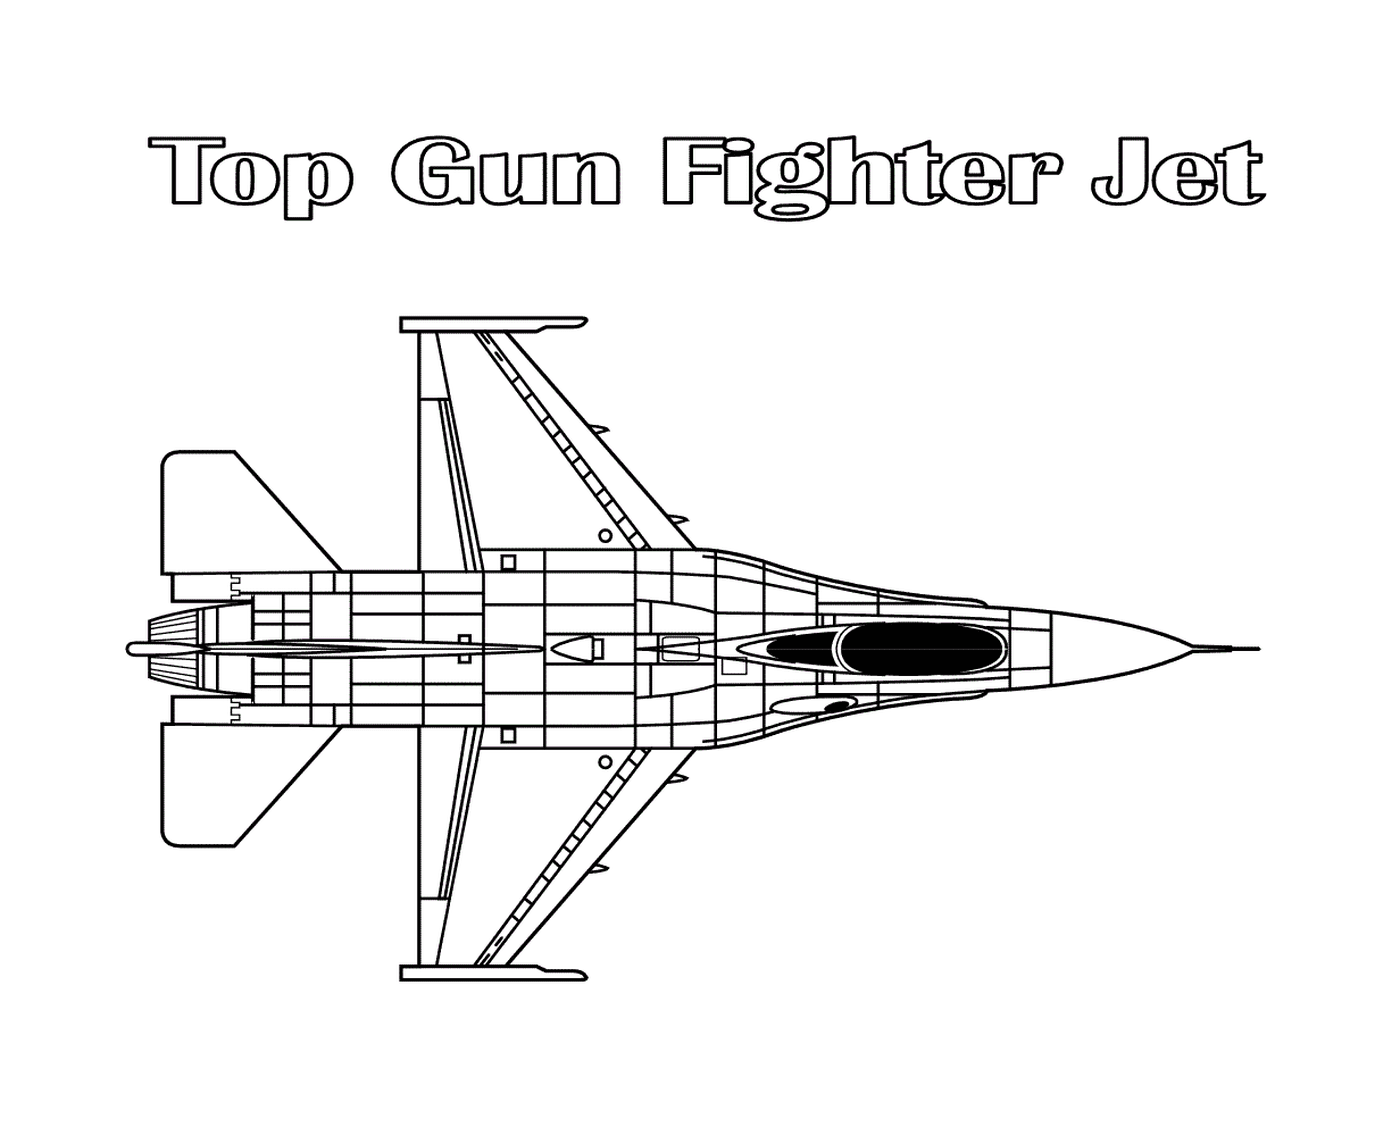  Avião de combate Top Gun 